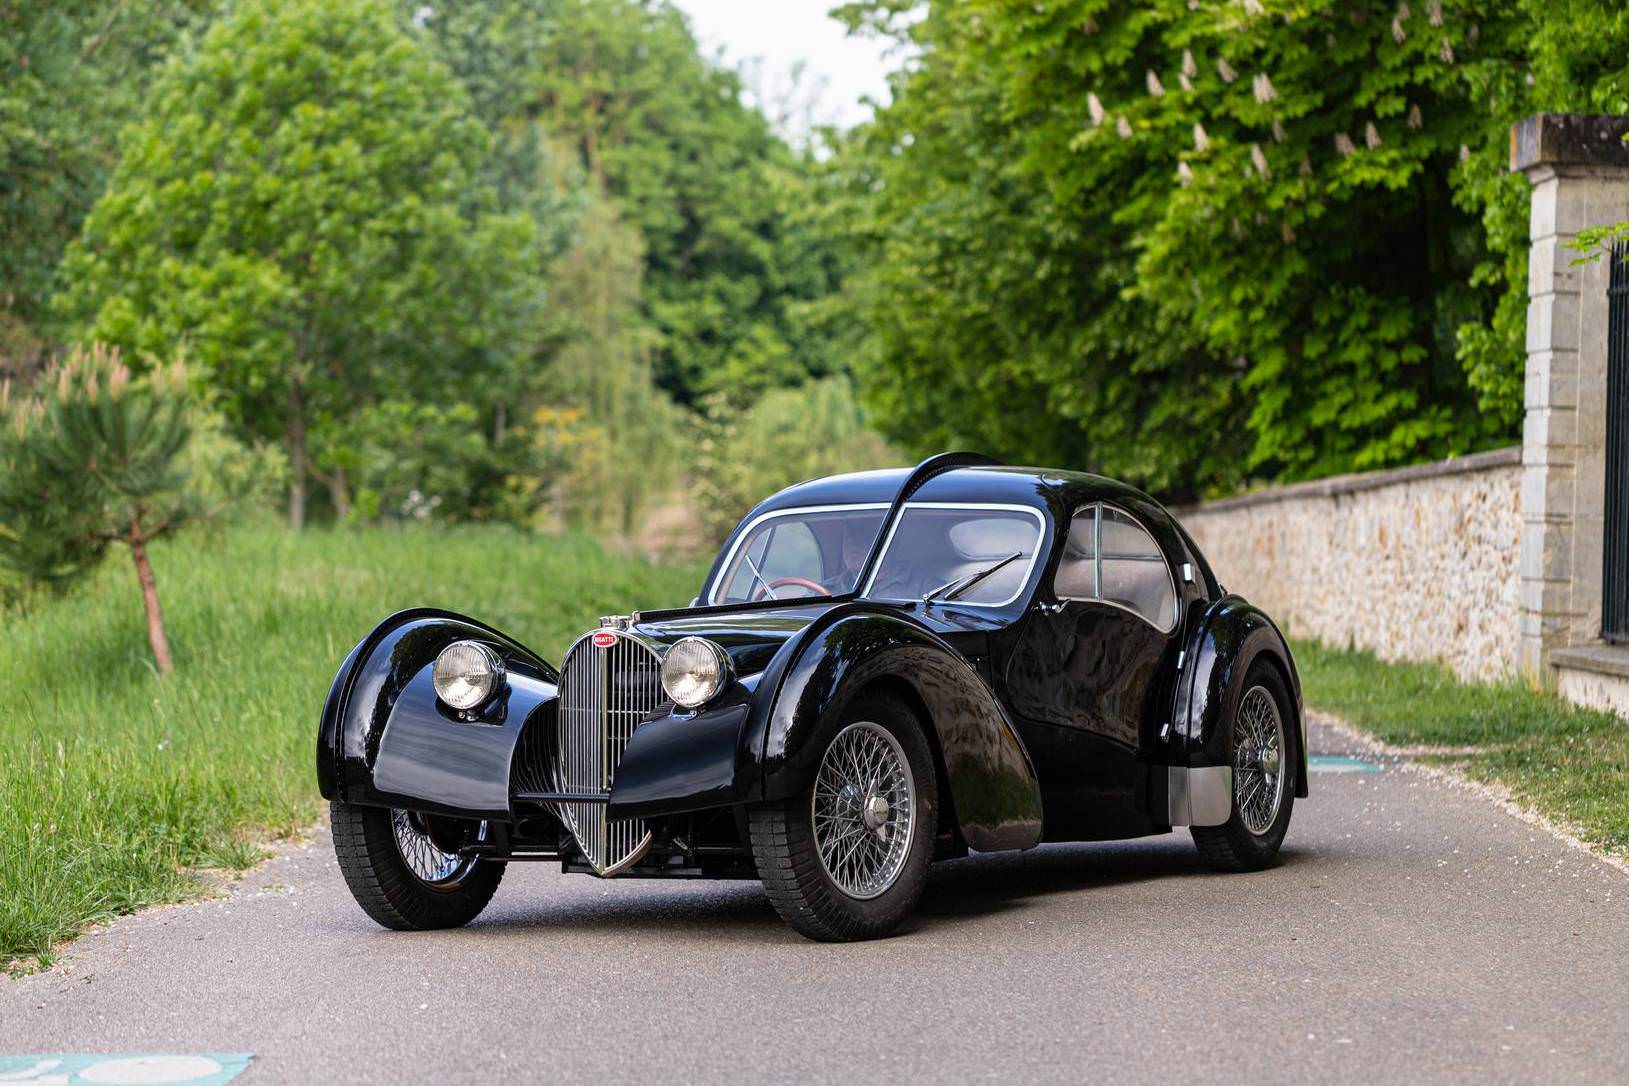 The Bugatti 57 SC Atlantic Stunt Car From The 2017 Film “Overdrive”